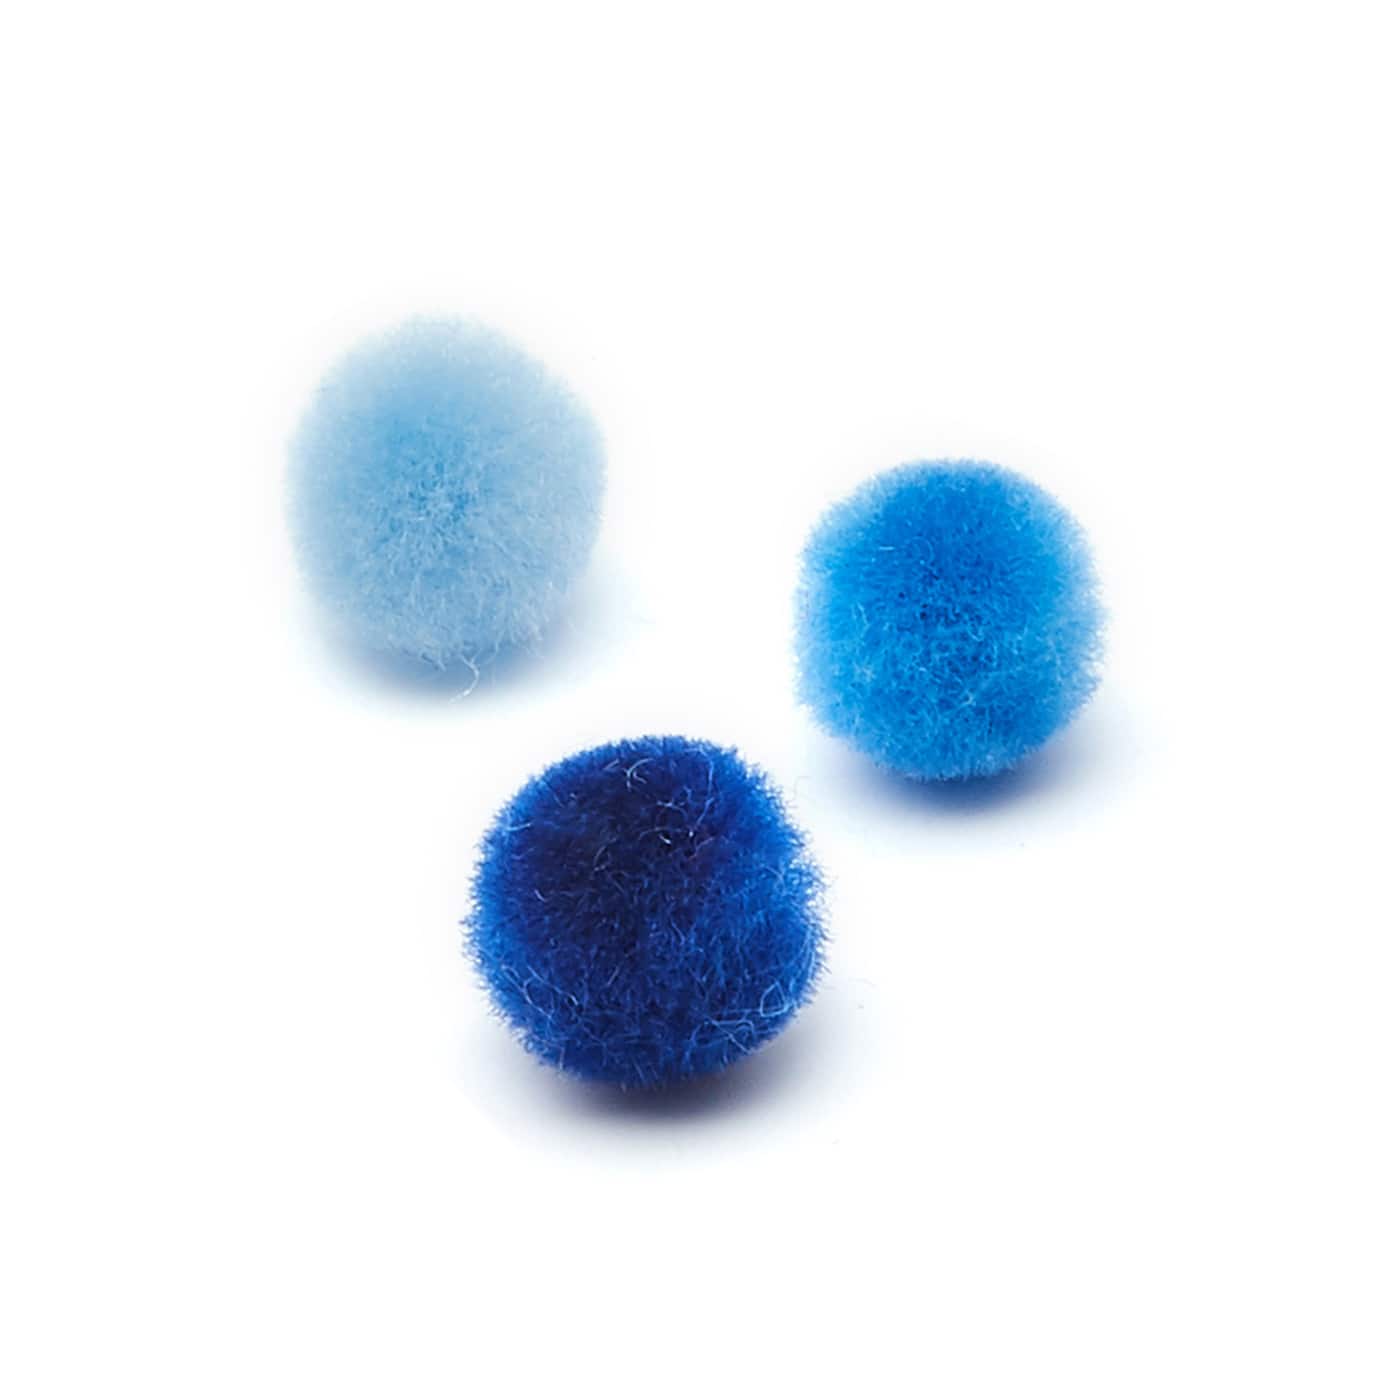 karton influenza alien 1/2" Mixed Blue Pom Poms by Creatology™ | Michaels